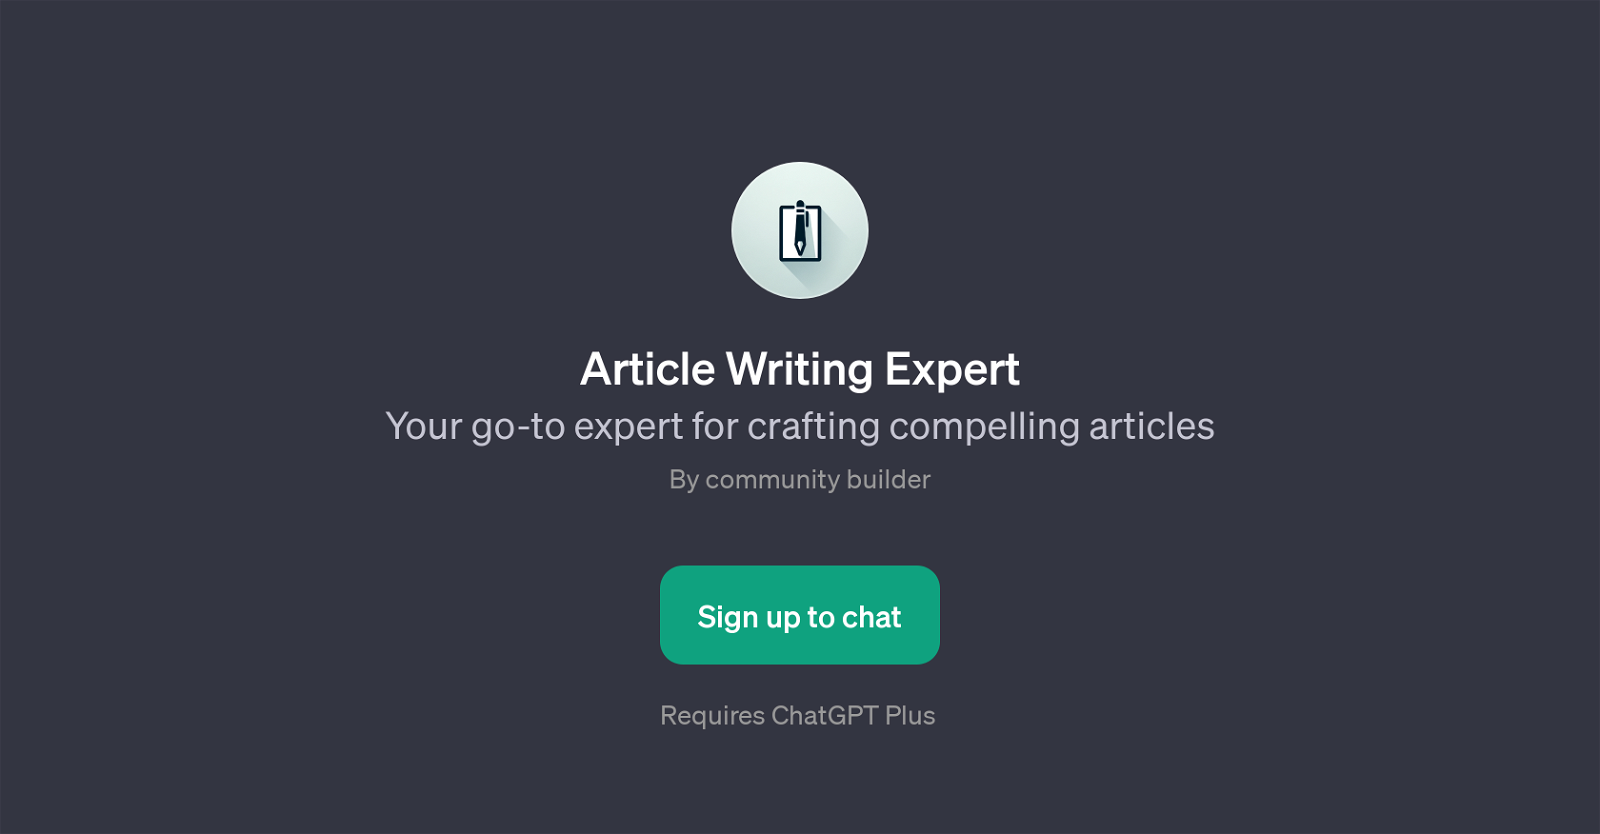 Article Writing Expert website